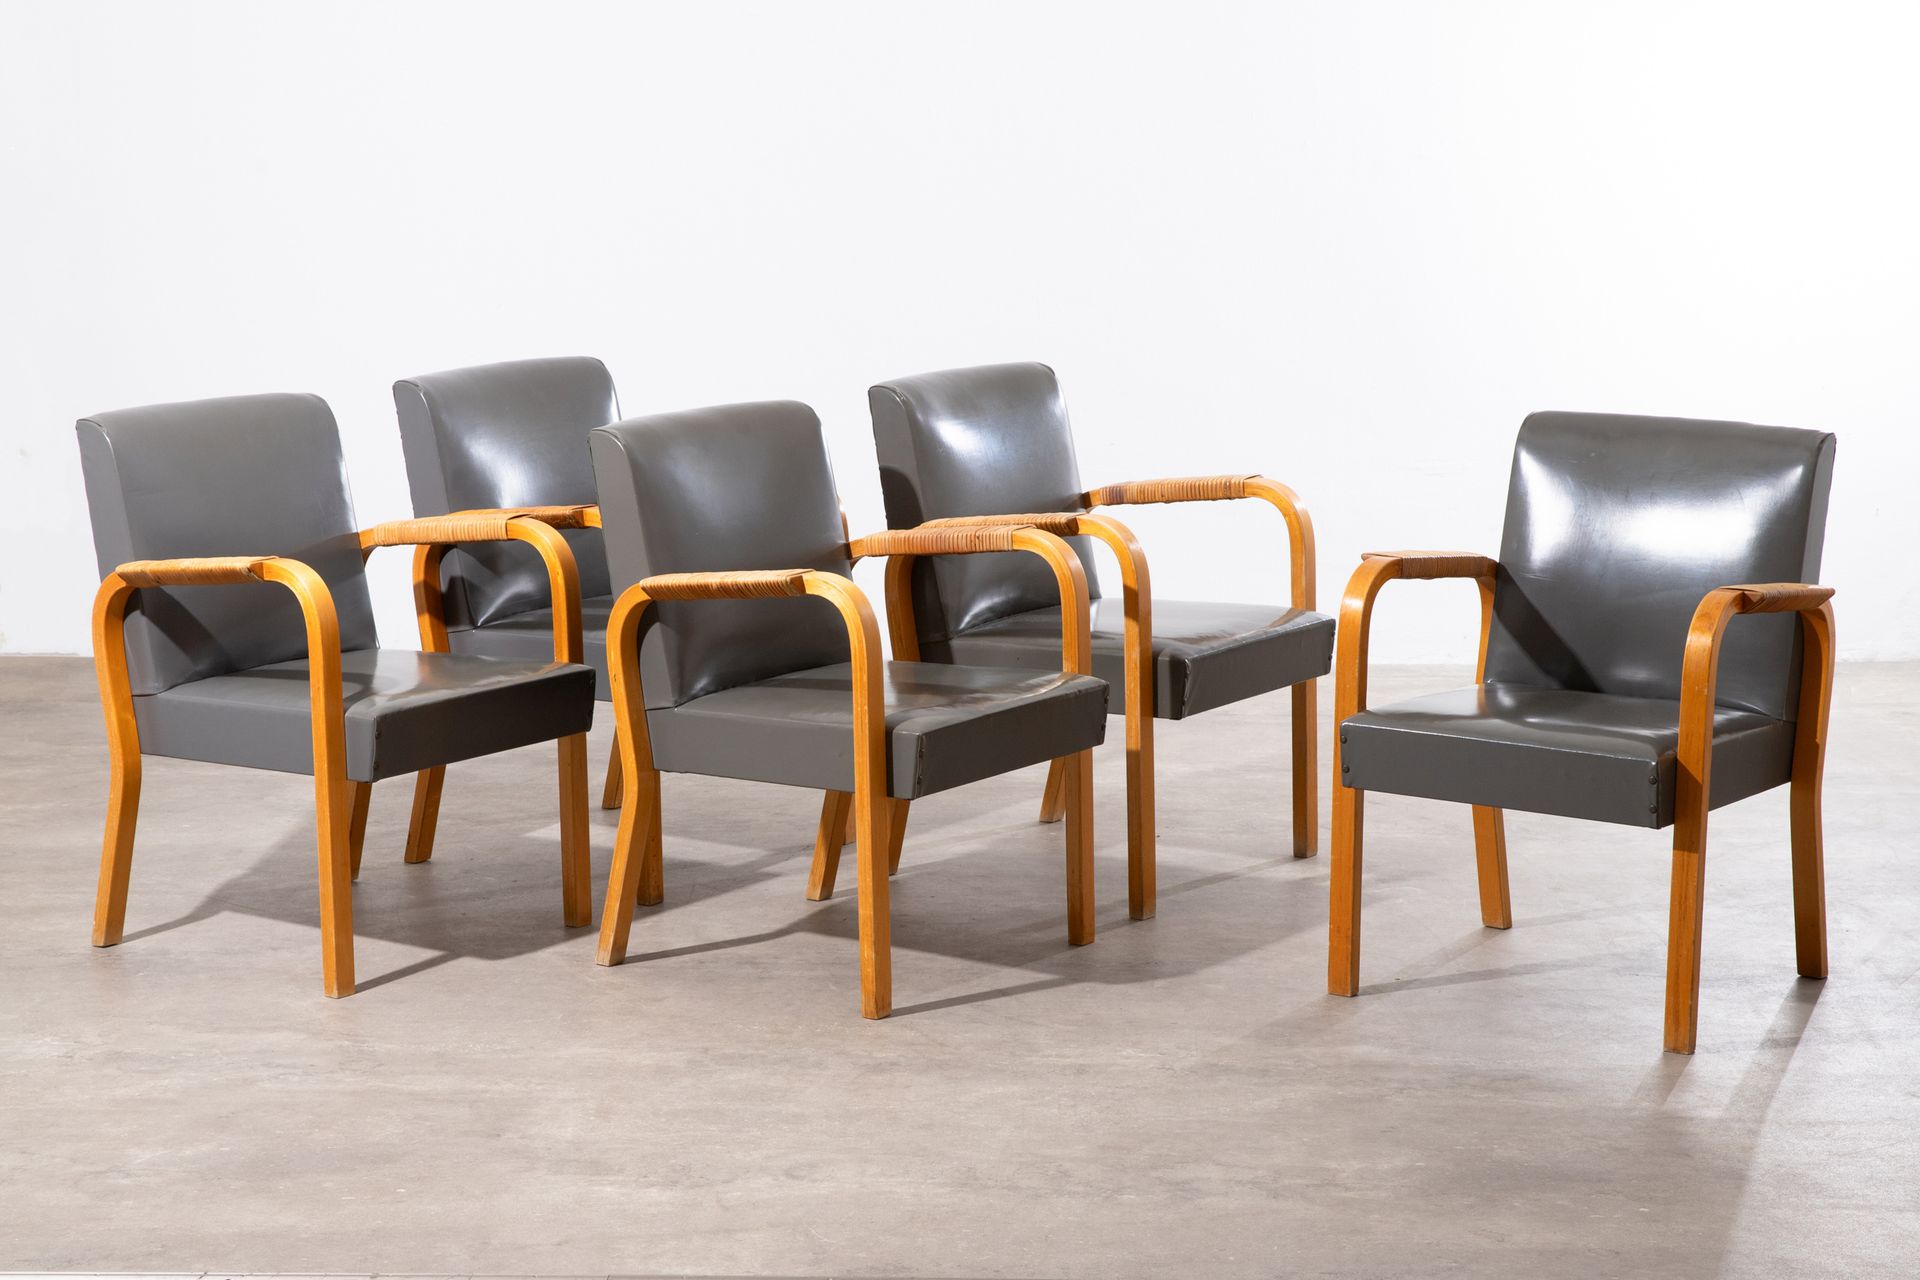 Alvar Aalto, 5 armchairs, model no. 46 Alvar Aalto, 5 sillones modelo nº 46
Dise&hellip;